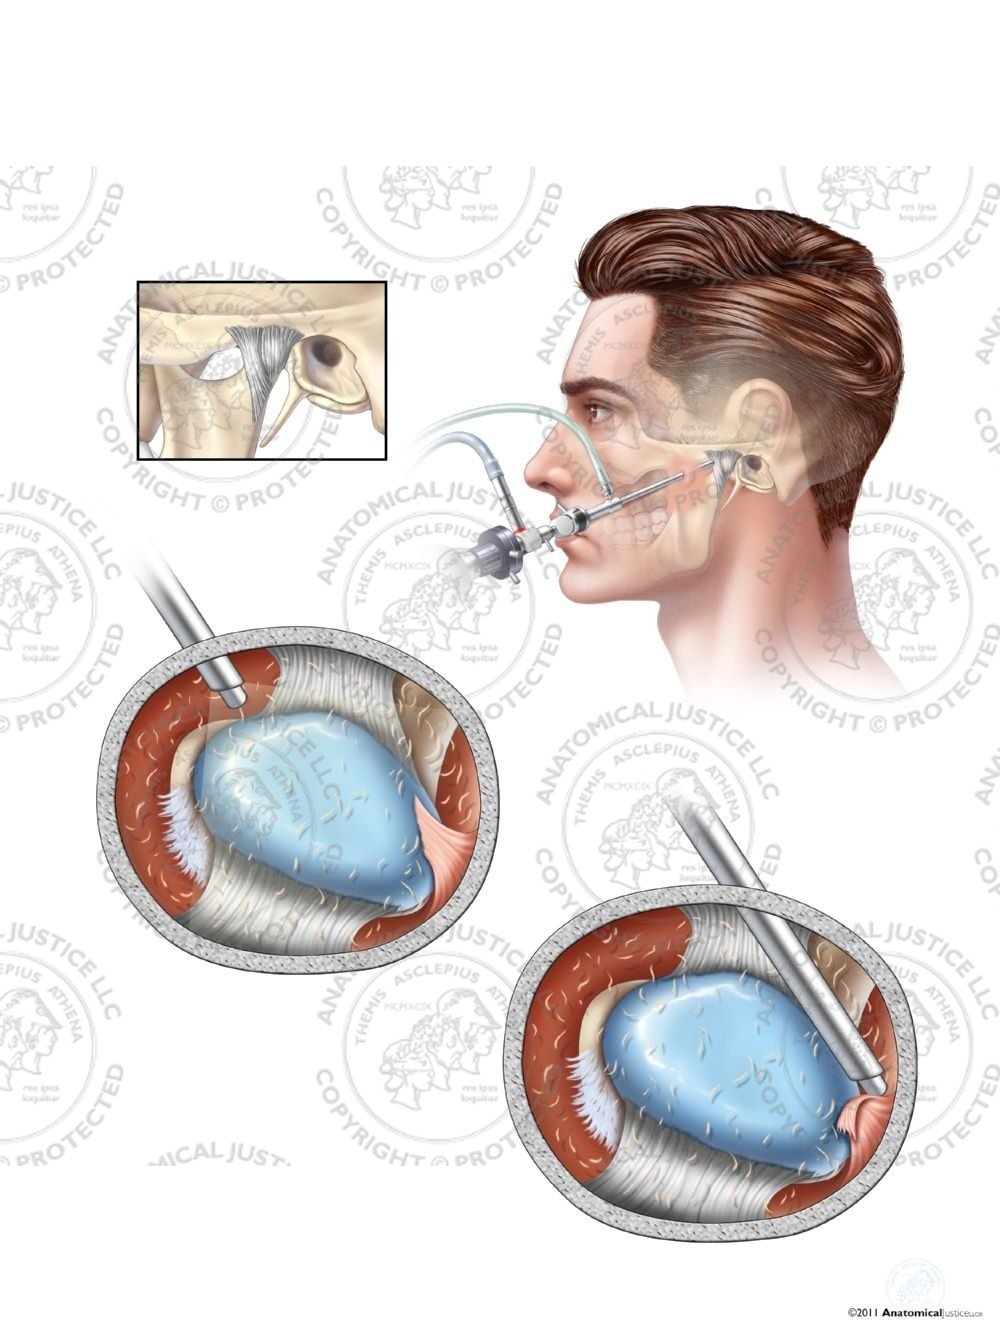 Male Arthroscopic Surgery of the Left Temporomandibular Joint (TMJ) – No Text